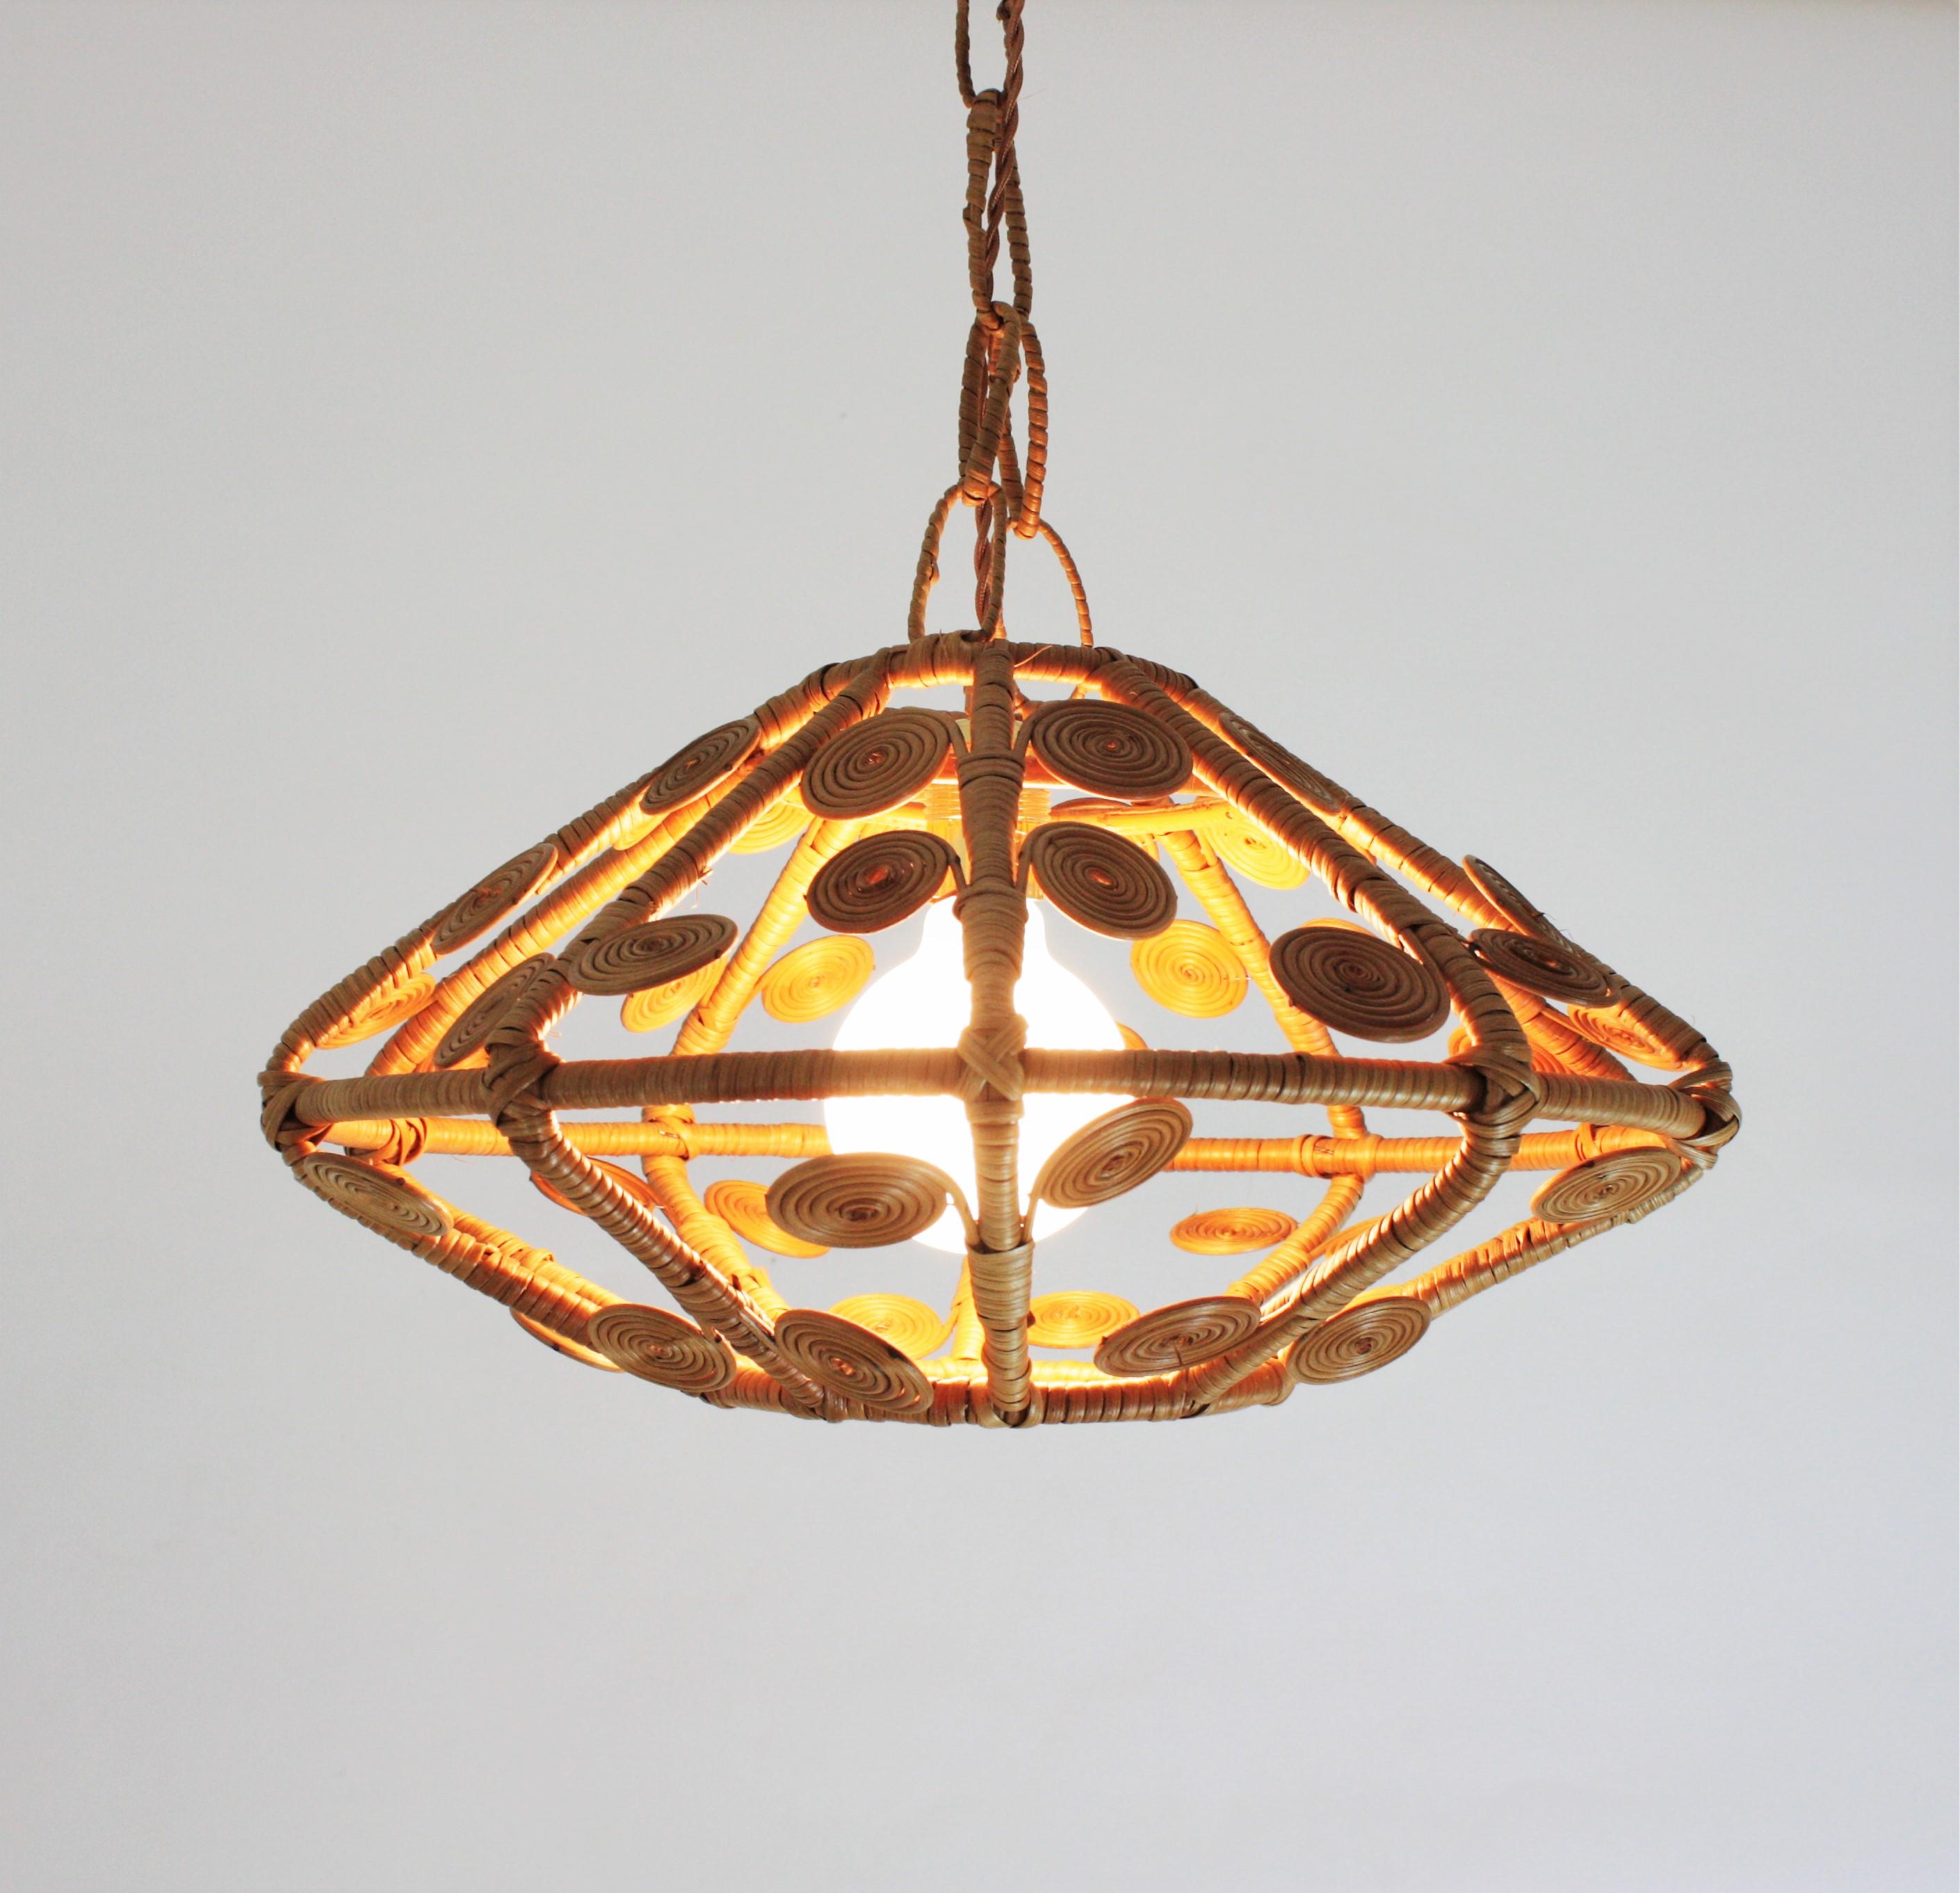 20th Century Spanish Modern Rattan Wicker Pendant Hanging Lamp with Filigree Details, 1960s